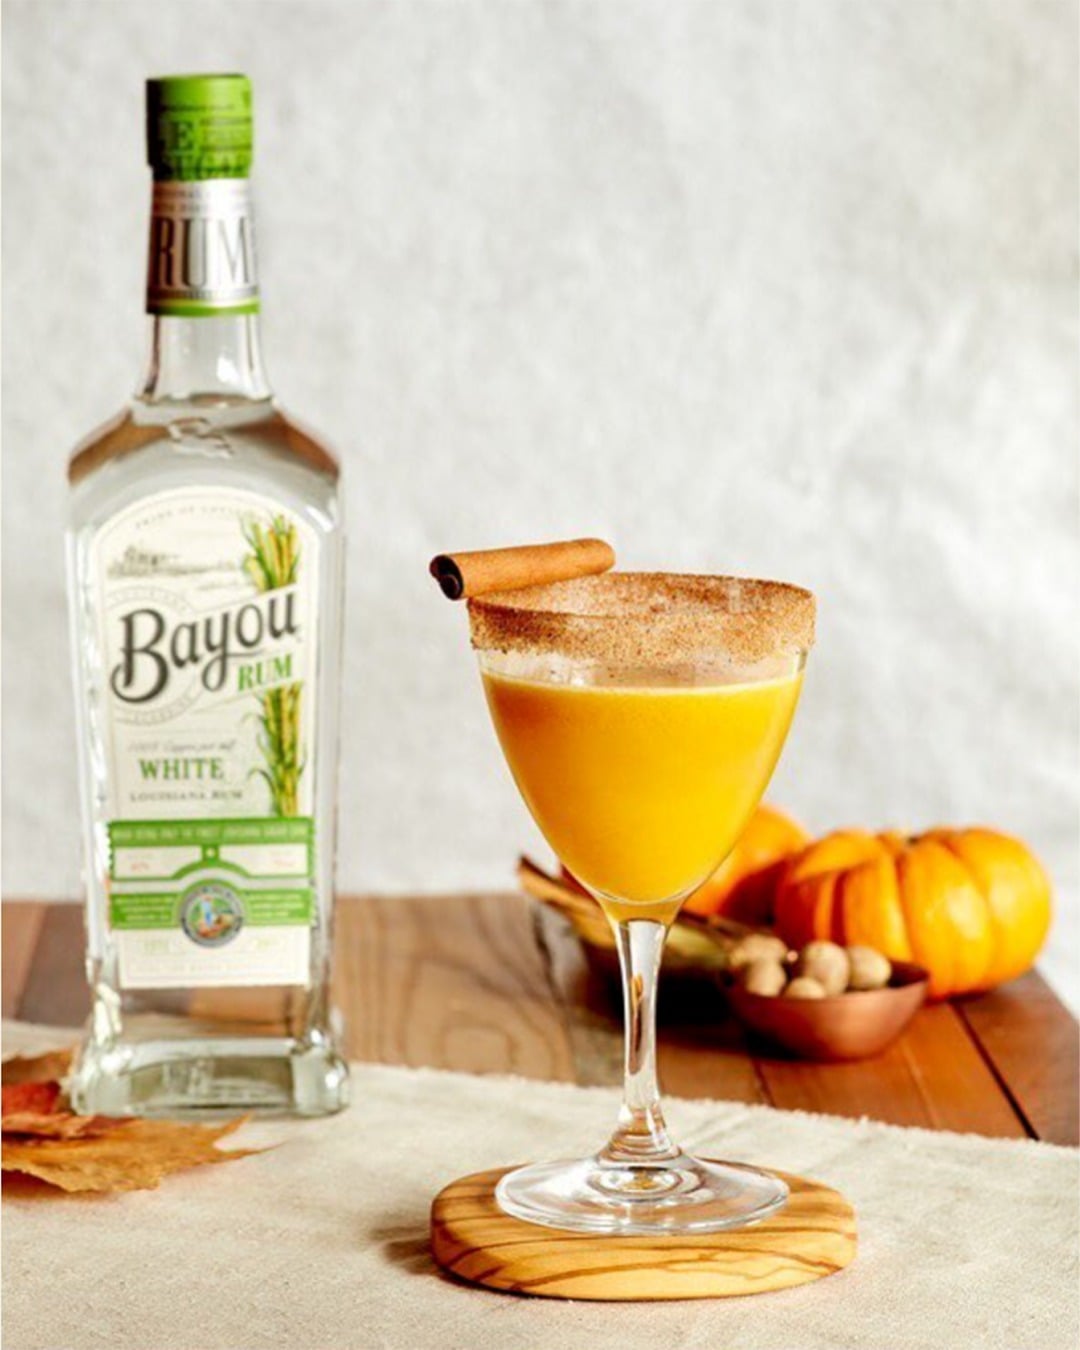 Pumpkin daiquiri with Bayou Rum bottle